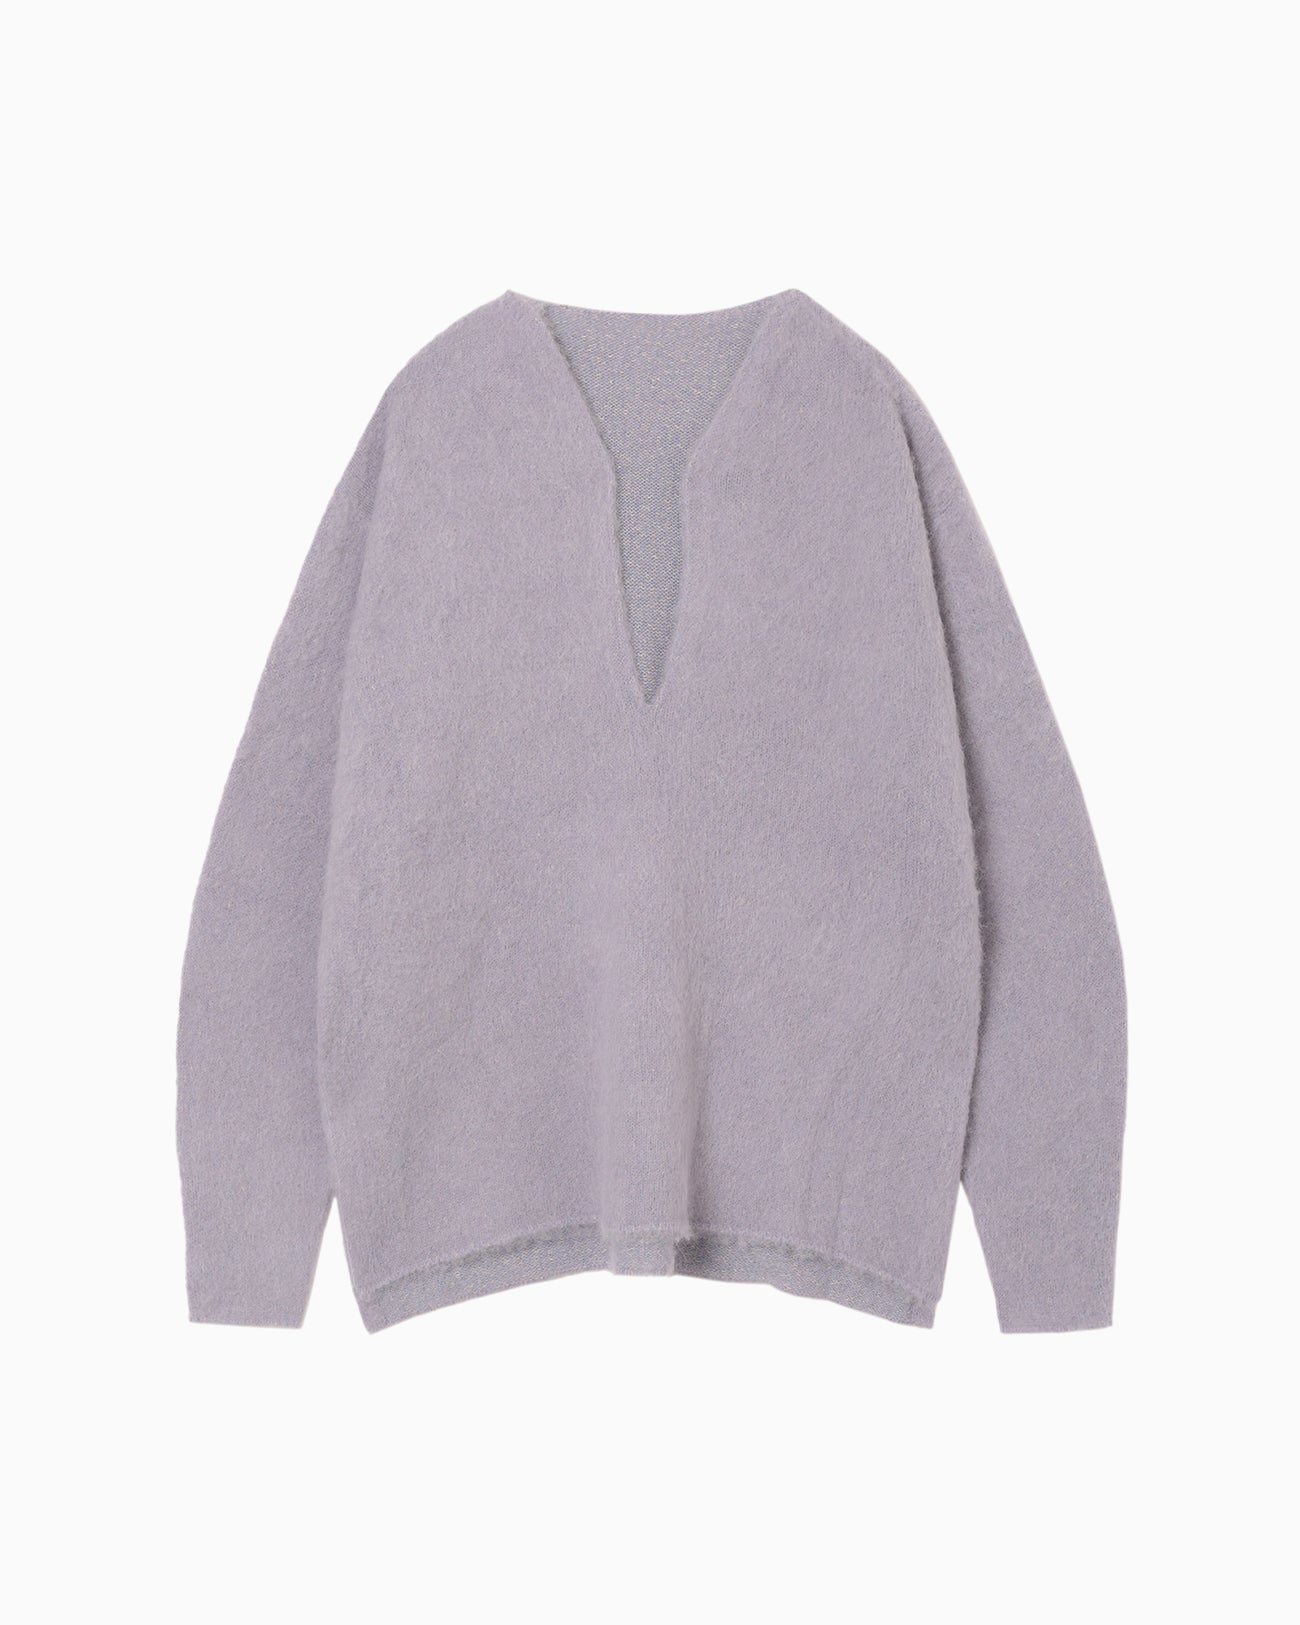 Brused Alpaca Knitted Top - lavender - Mame Kurogouchi